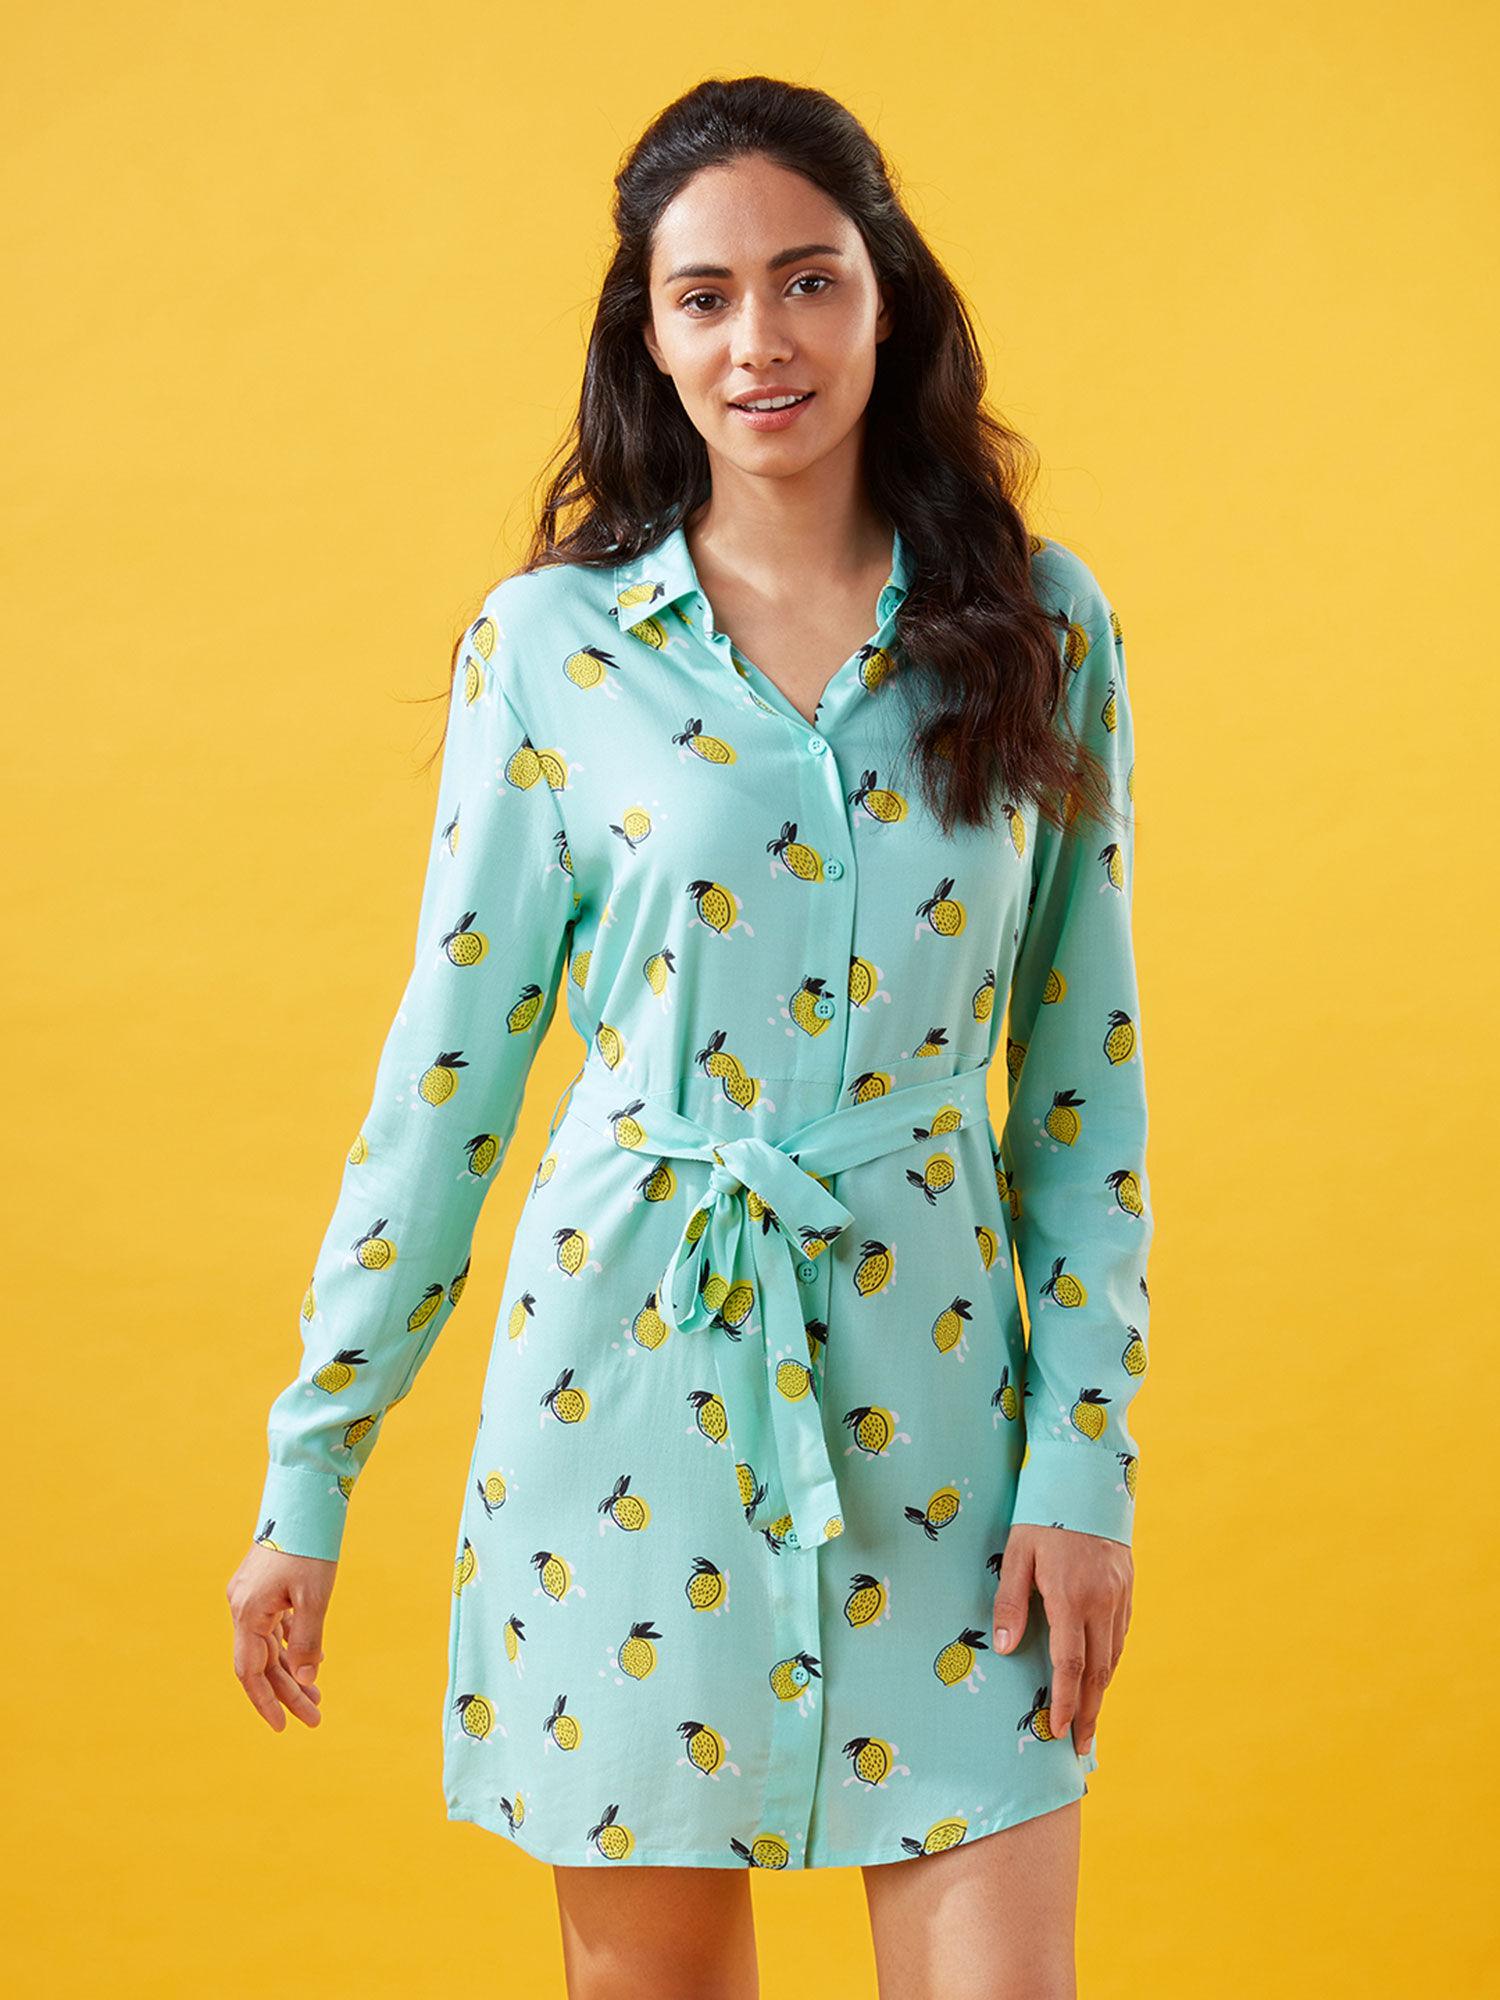 lemonade pattern graphic printed green shirt dresses